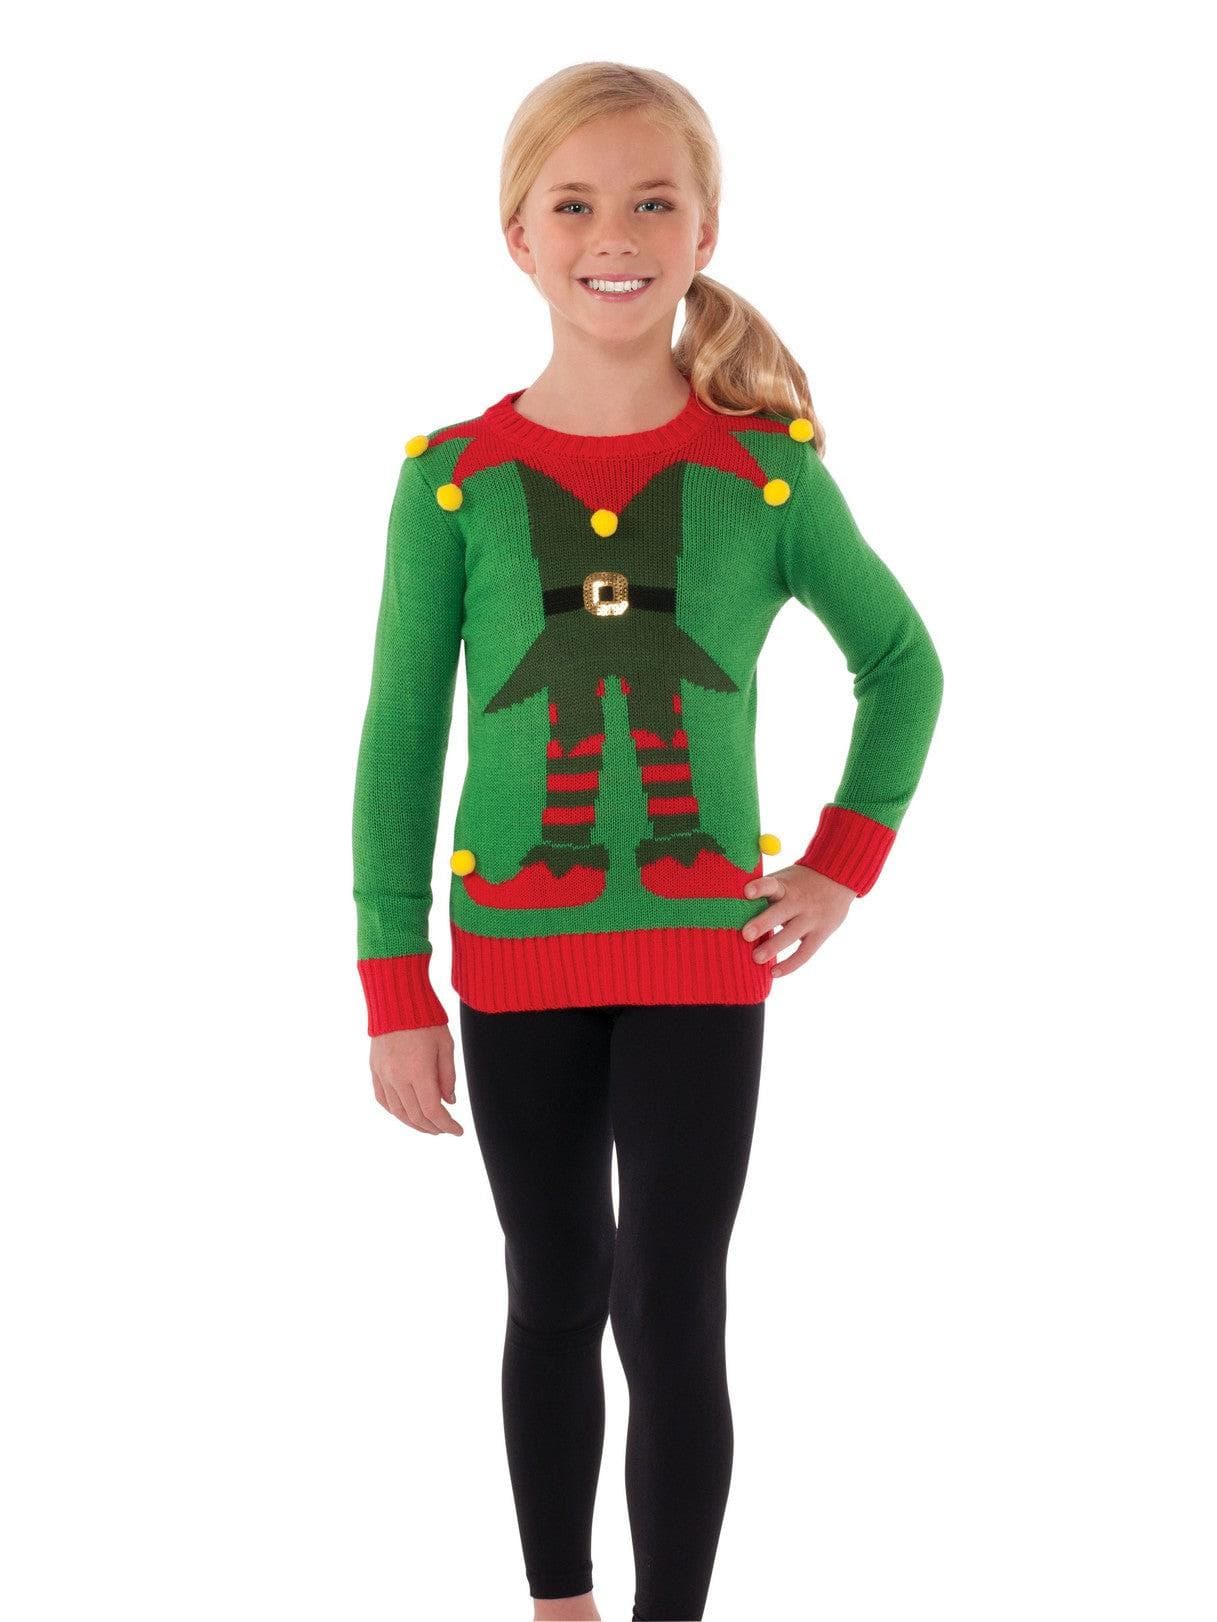 Kids Green Elf Sweater - costumes.com